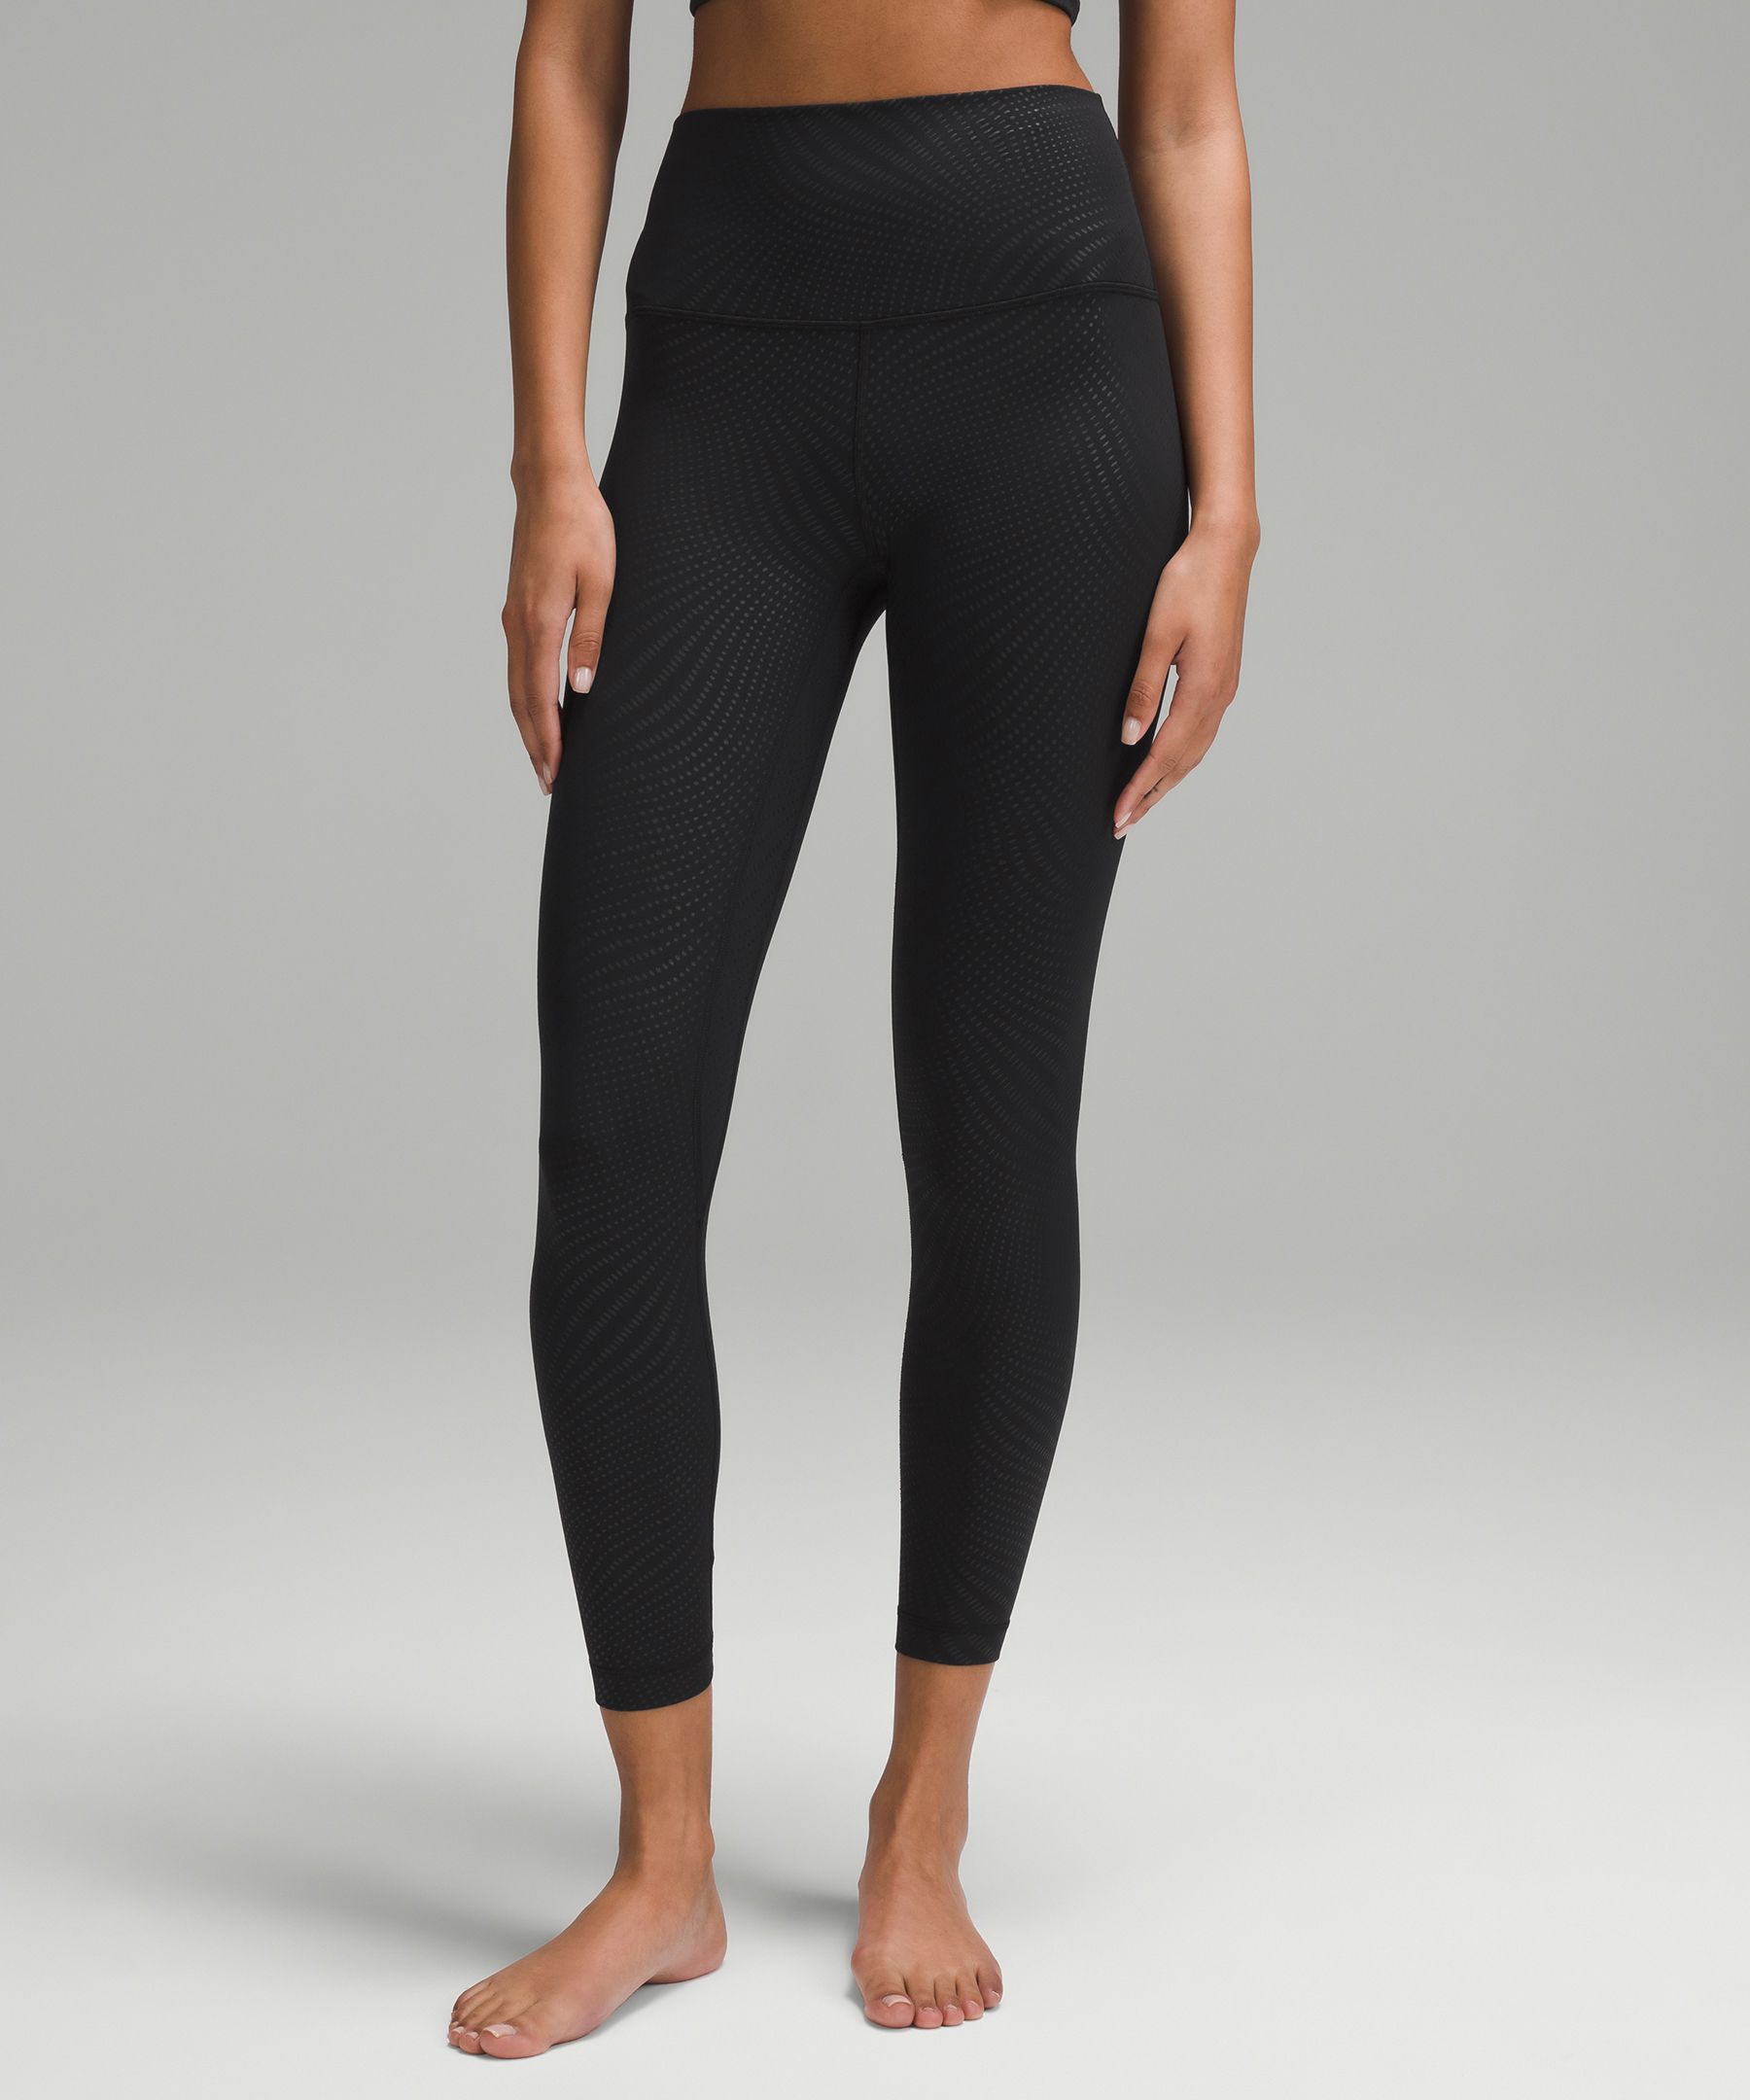 1pc Comfortable Women's Black Yoga Pants With Flared Hem